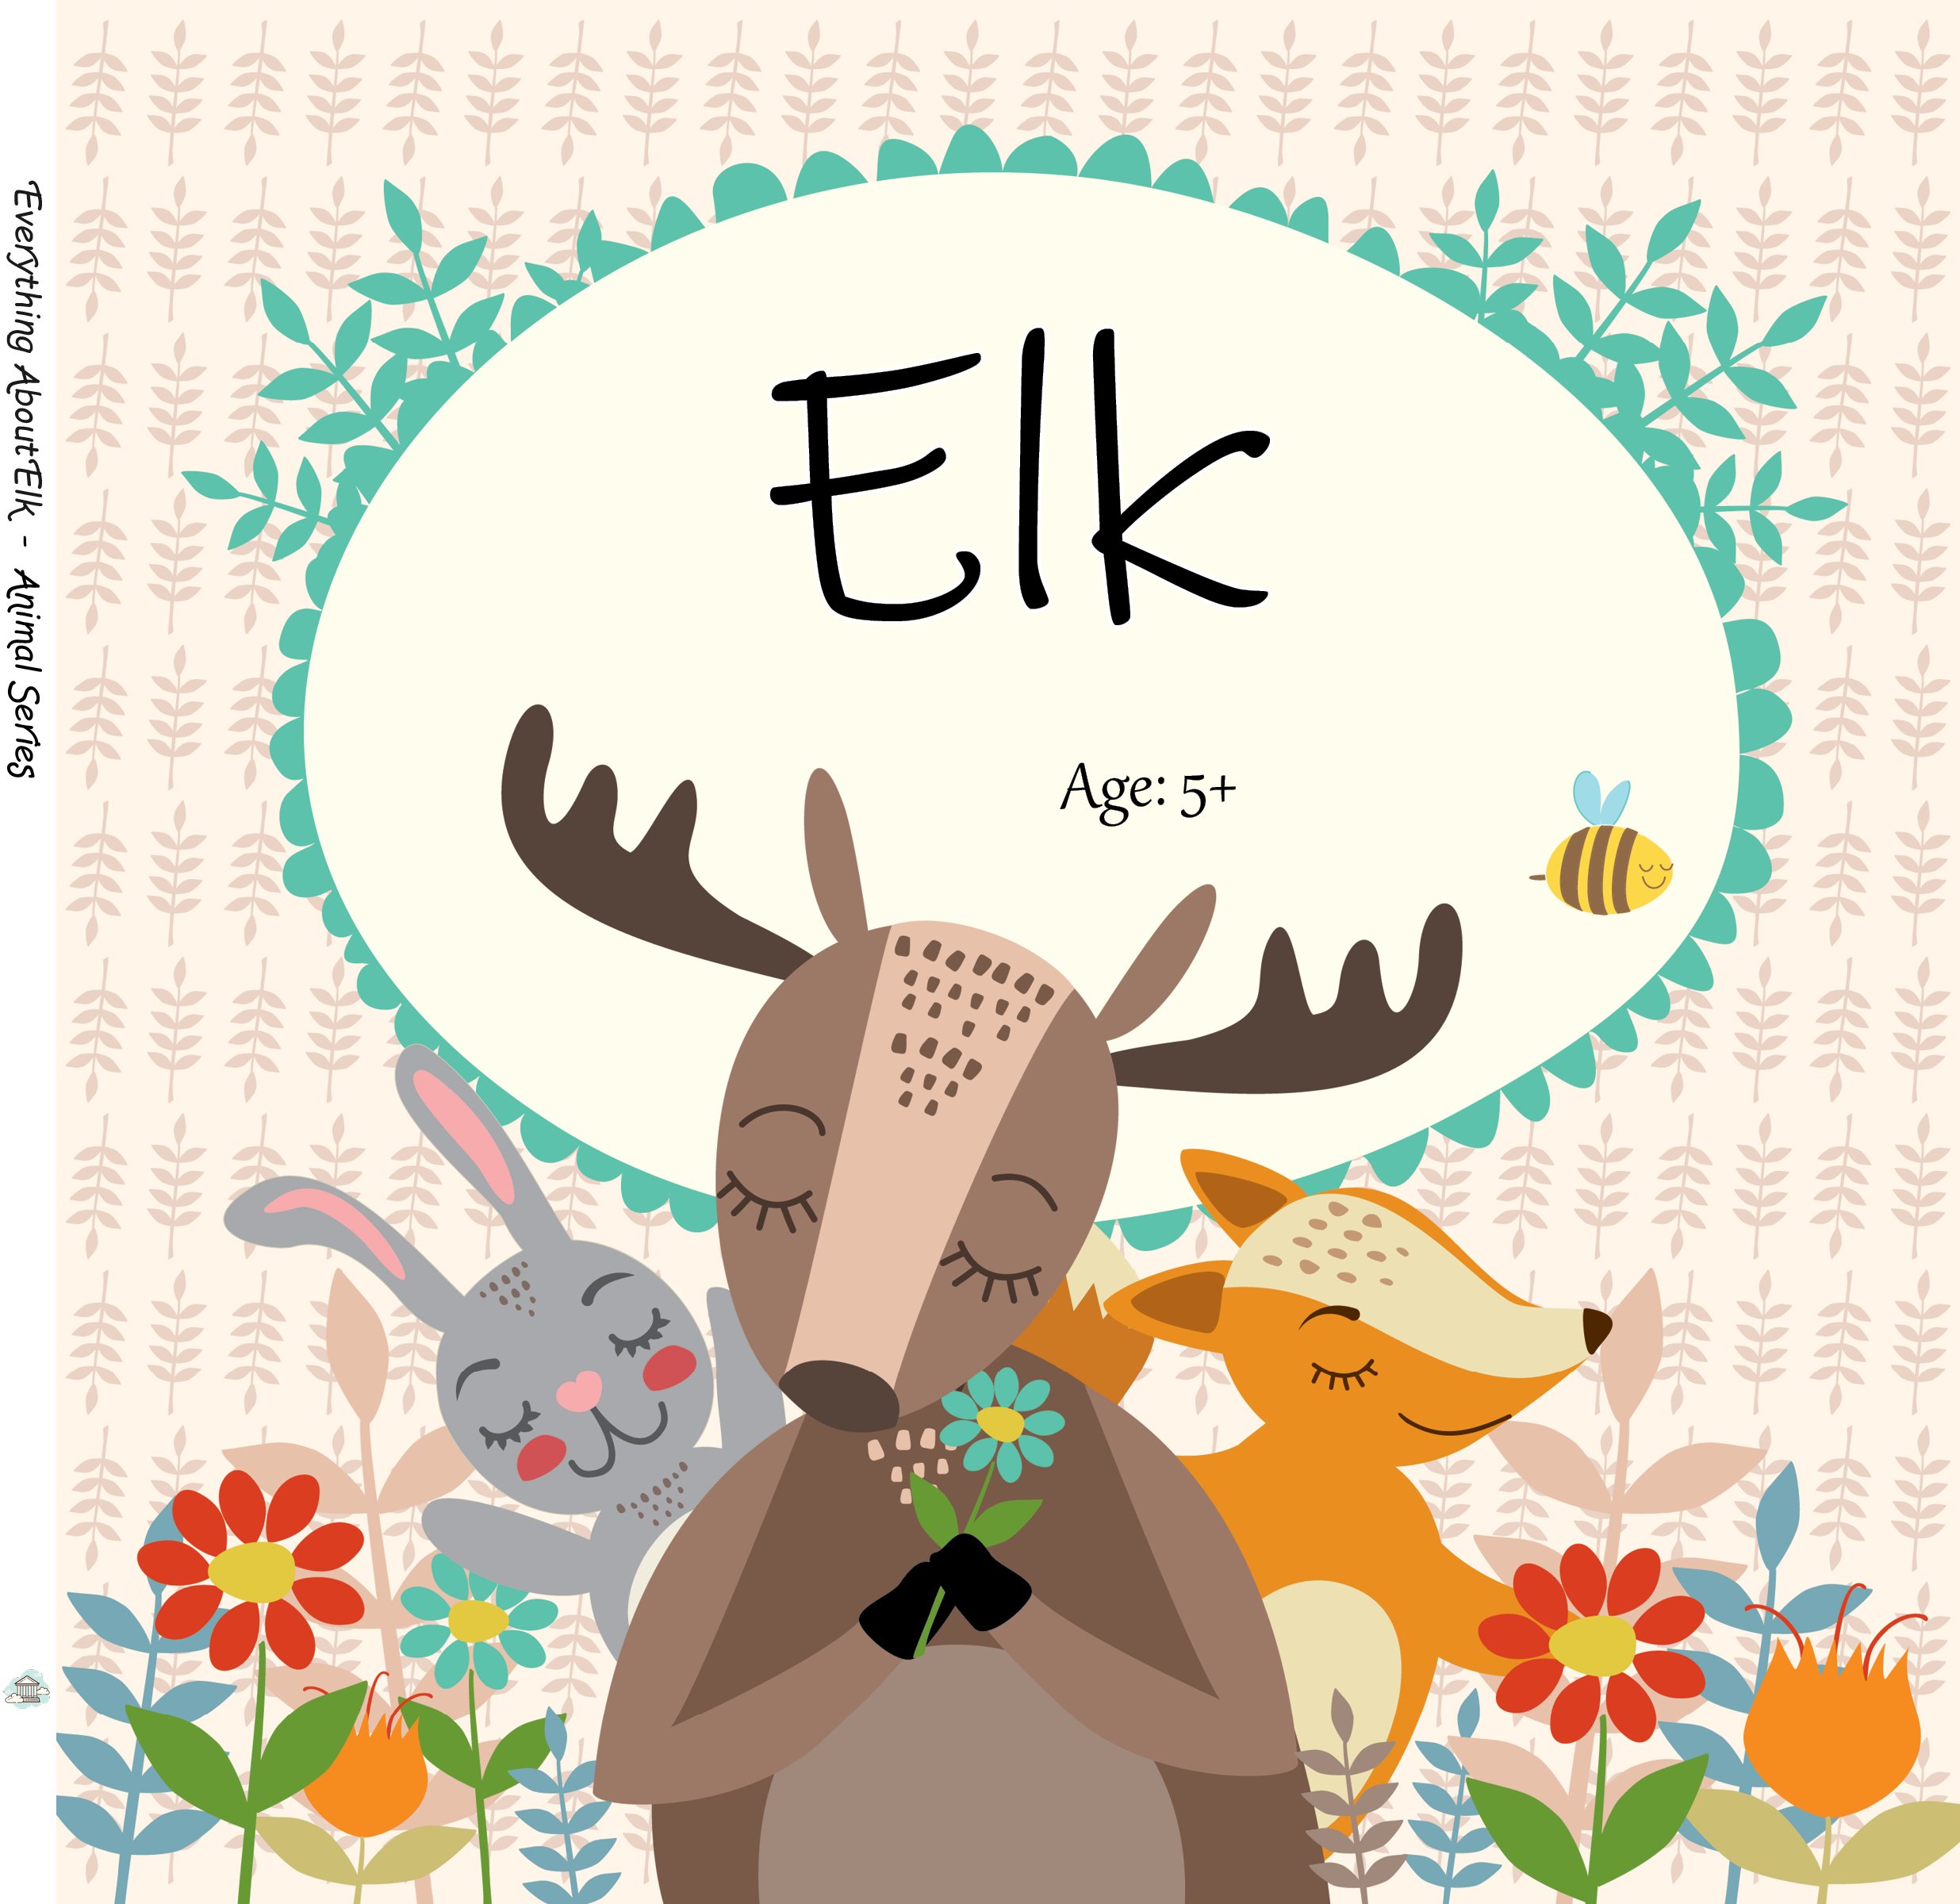 Everything about Elk.jpg